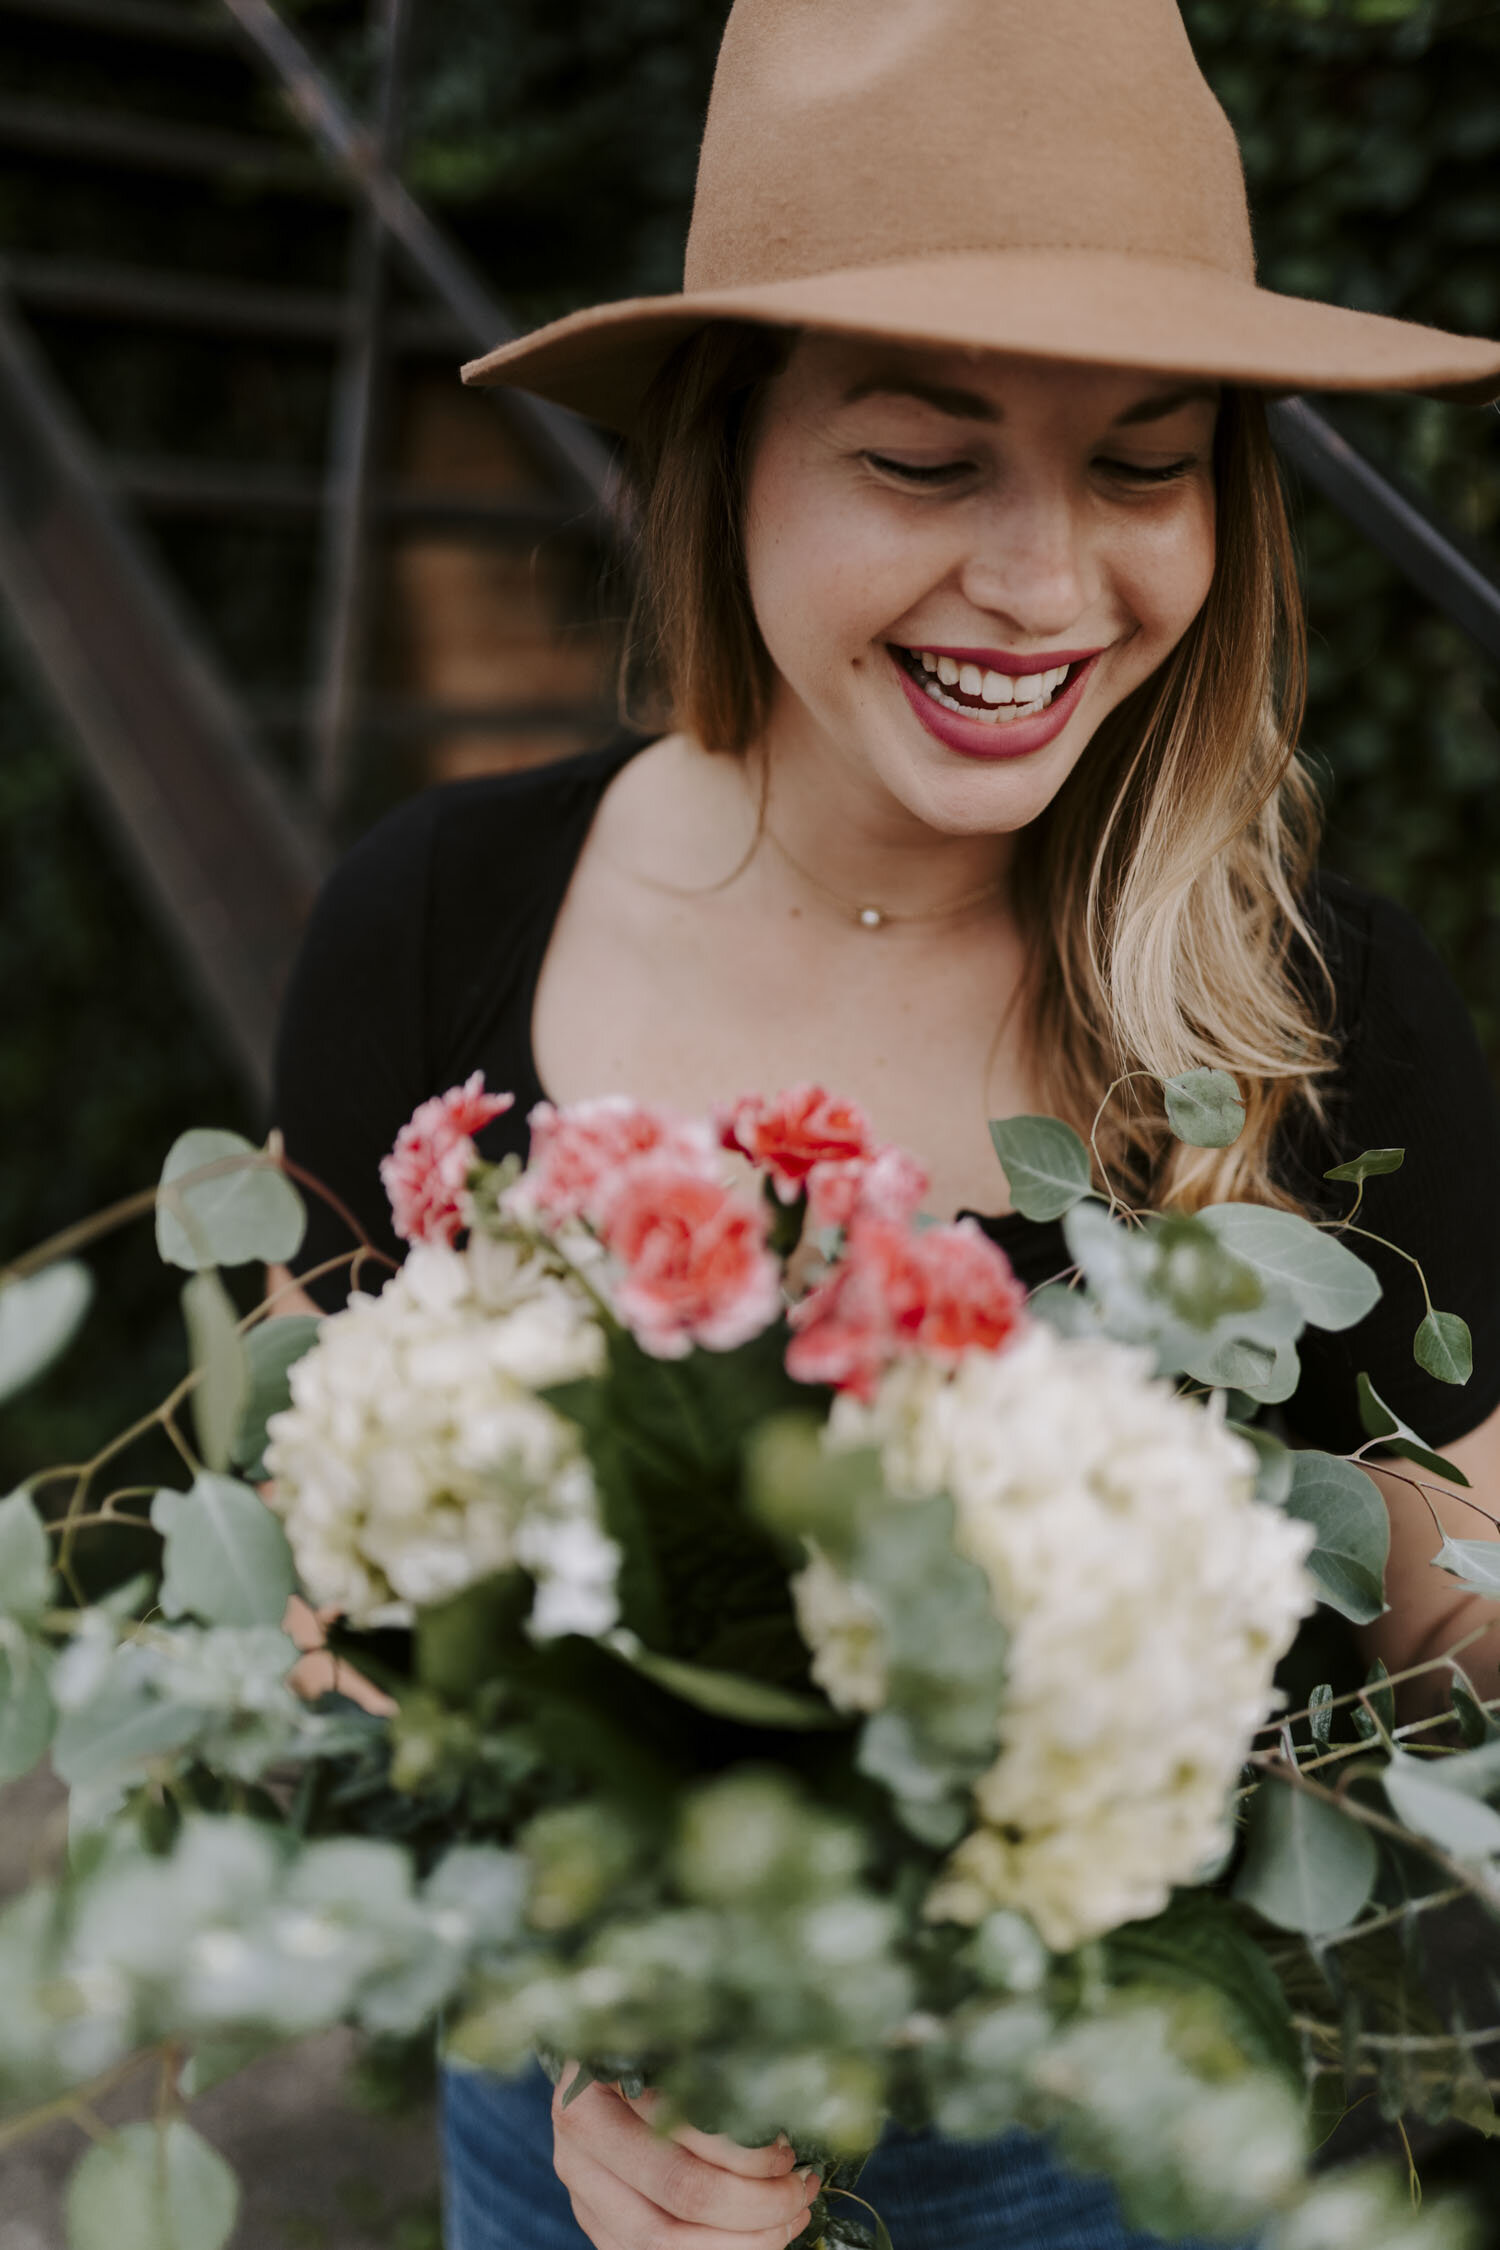 Fun & Wild Florist Branding Headshots for Triad Floral Business | Greensboro Winston-Salem, NC Photographer